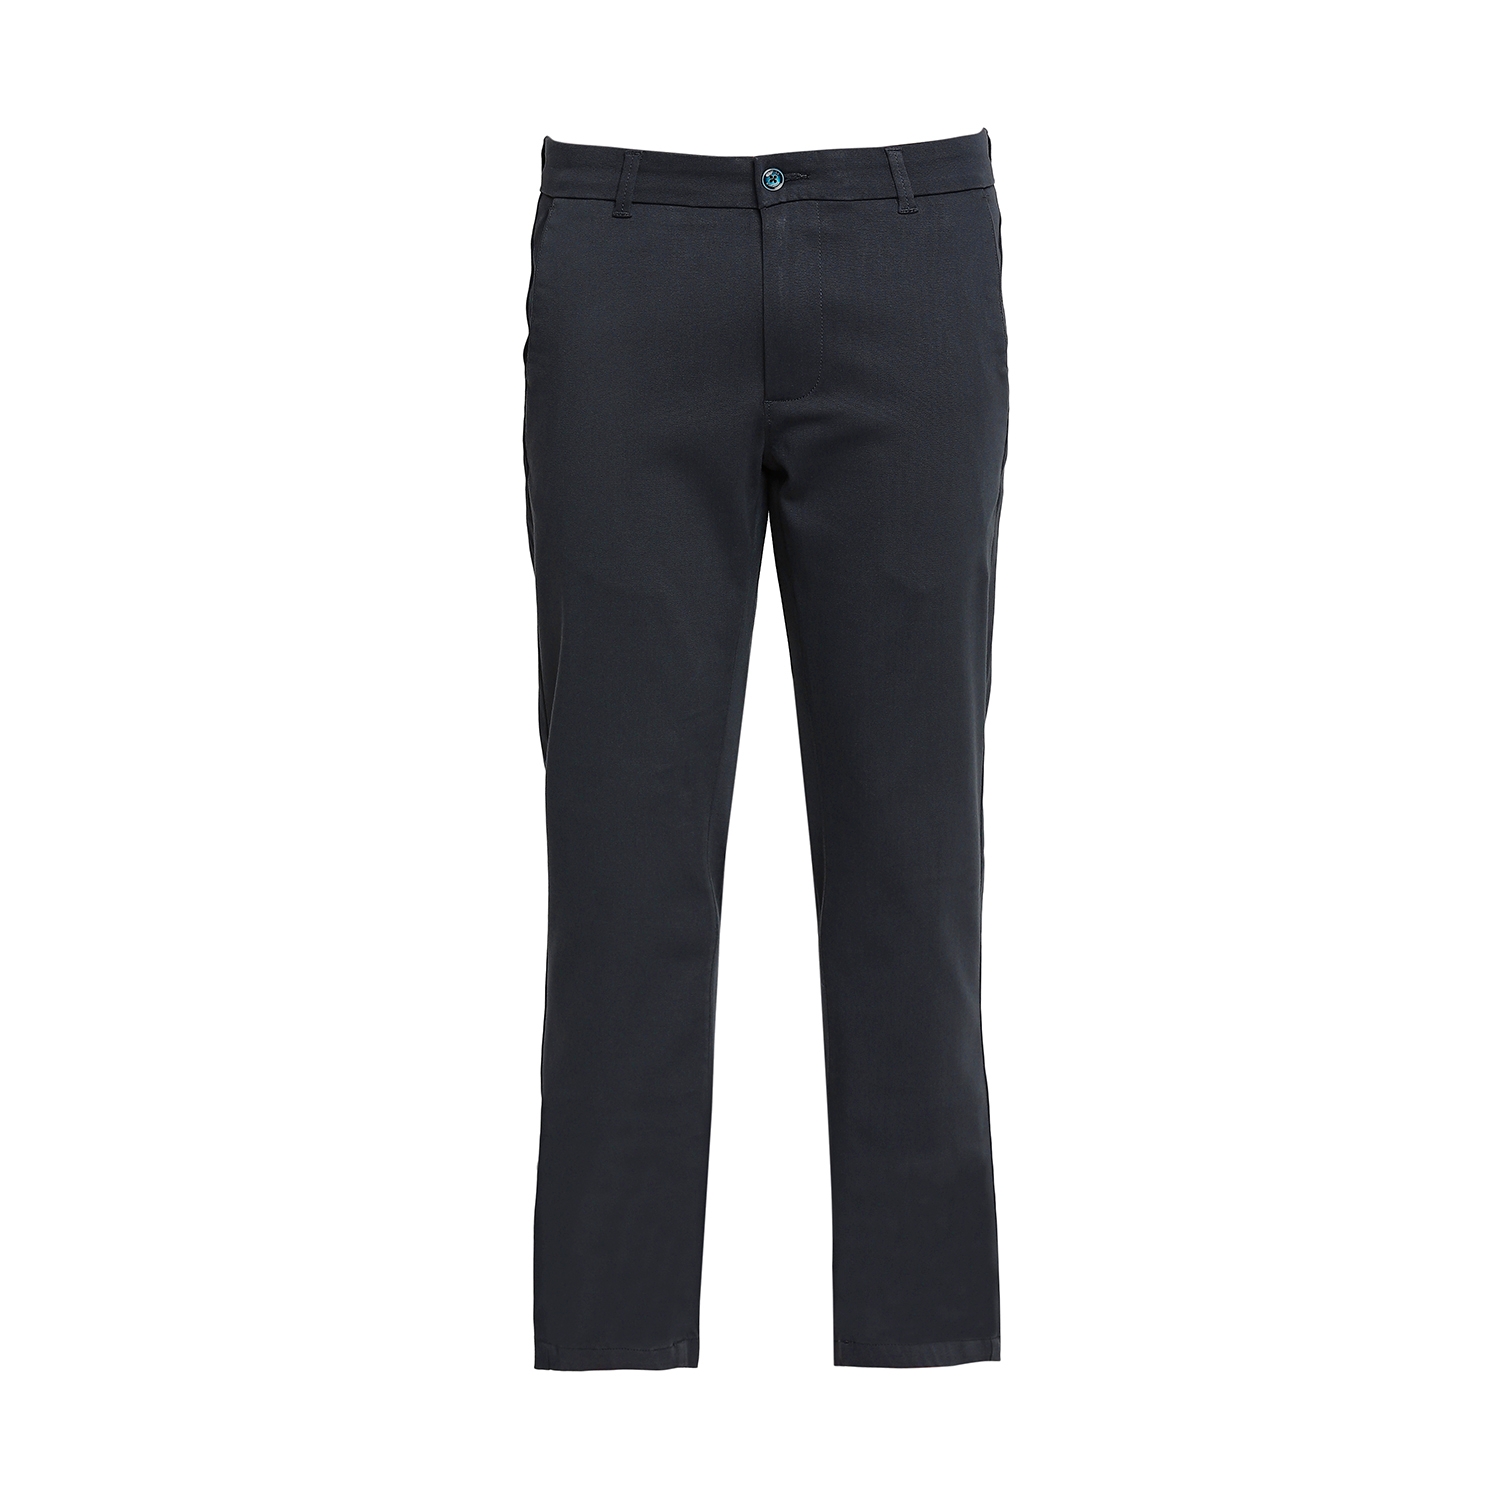 Basics | Men's Navy Cotton Blend Solid Trouser 5